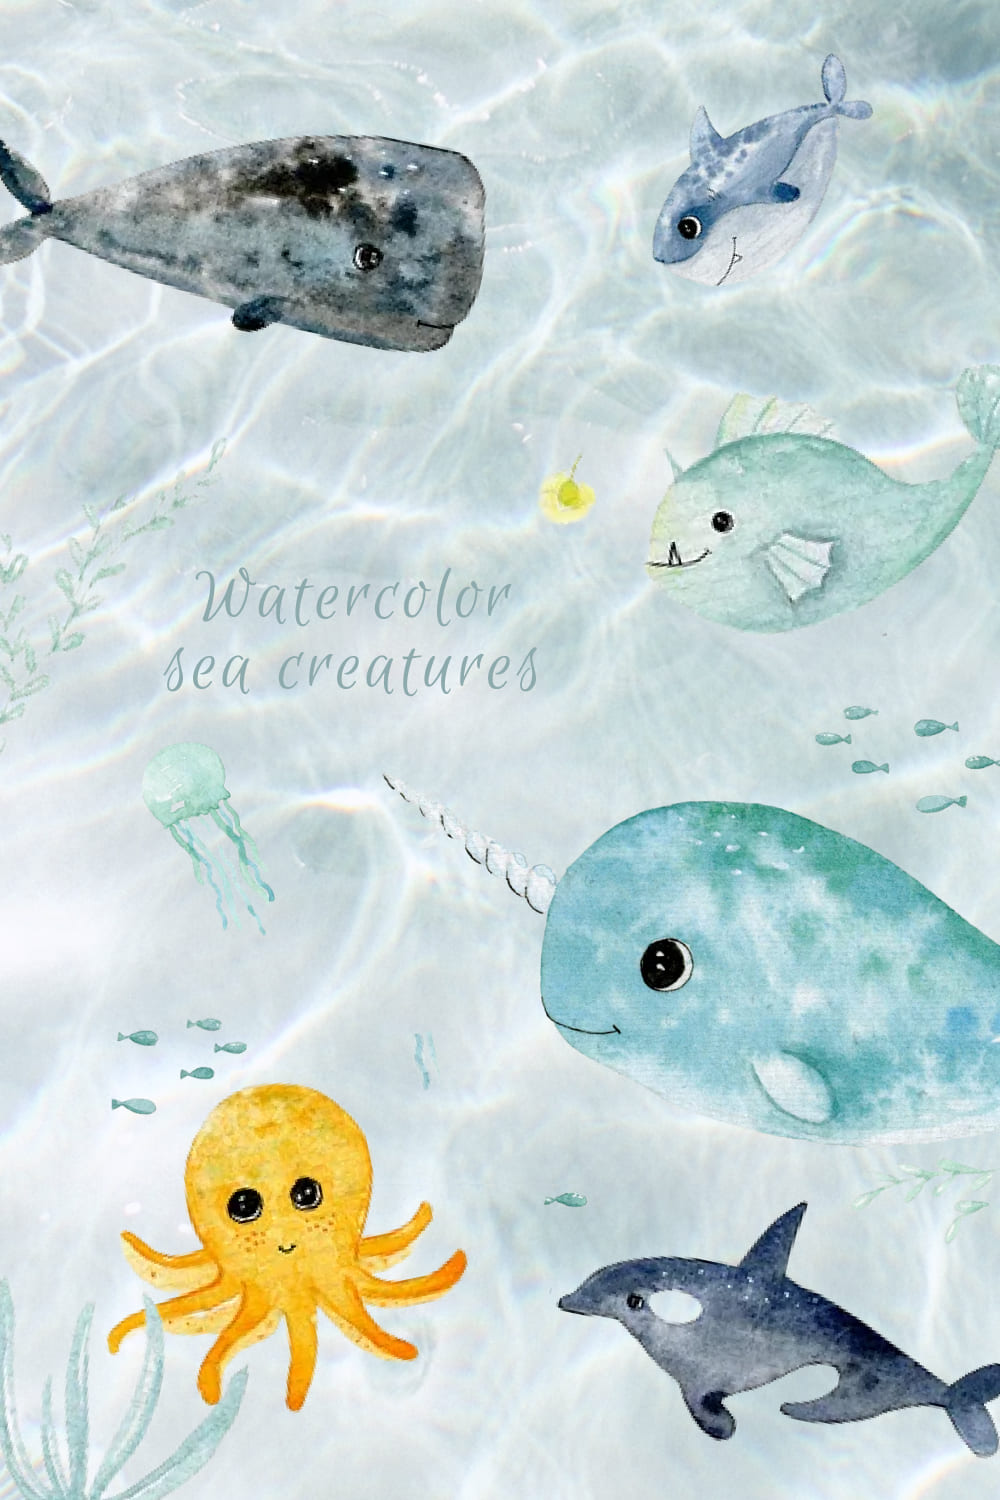 Watercolor Sea Creatures pinterest image.